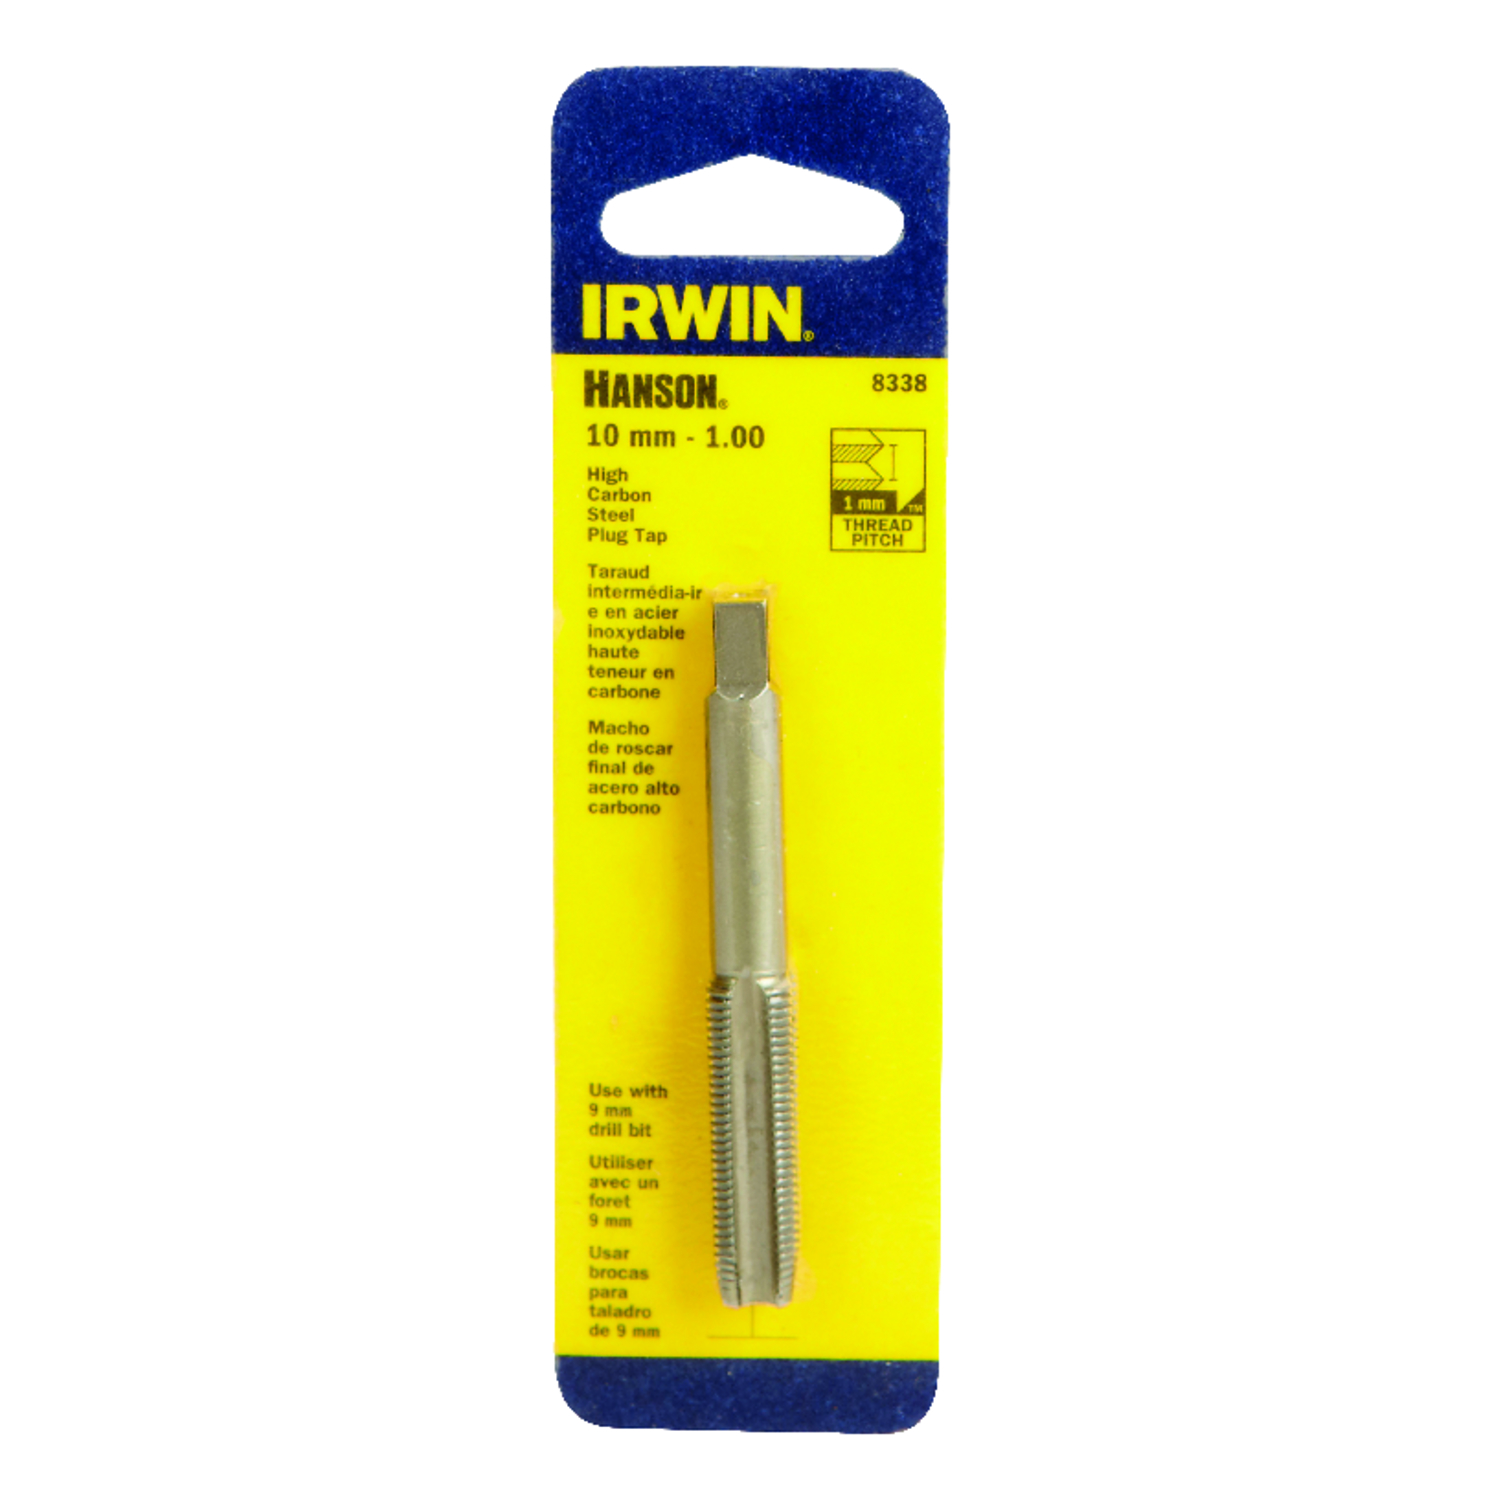 Irwin Hanson High Carbon Steel Metric Plug Tap 10 - 1.00 mm 1 pc